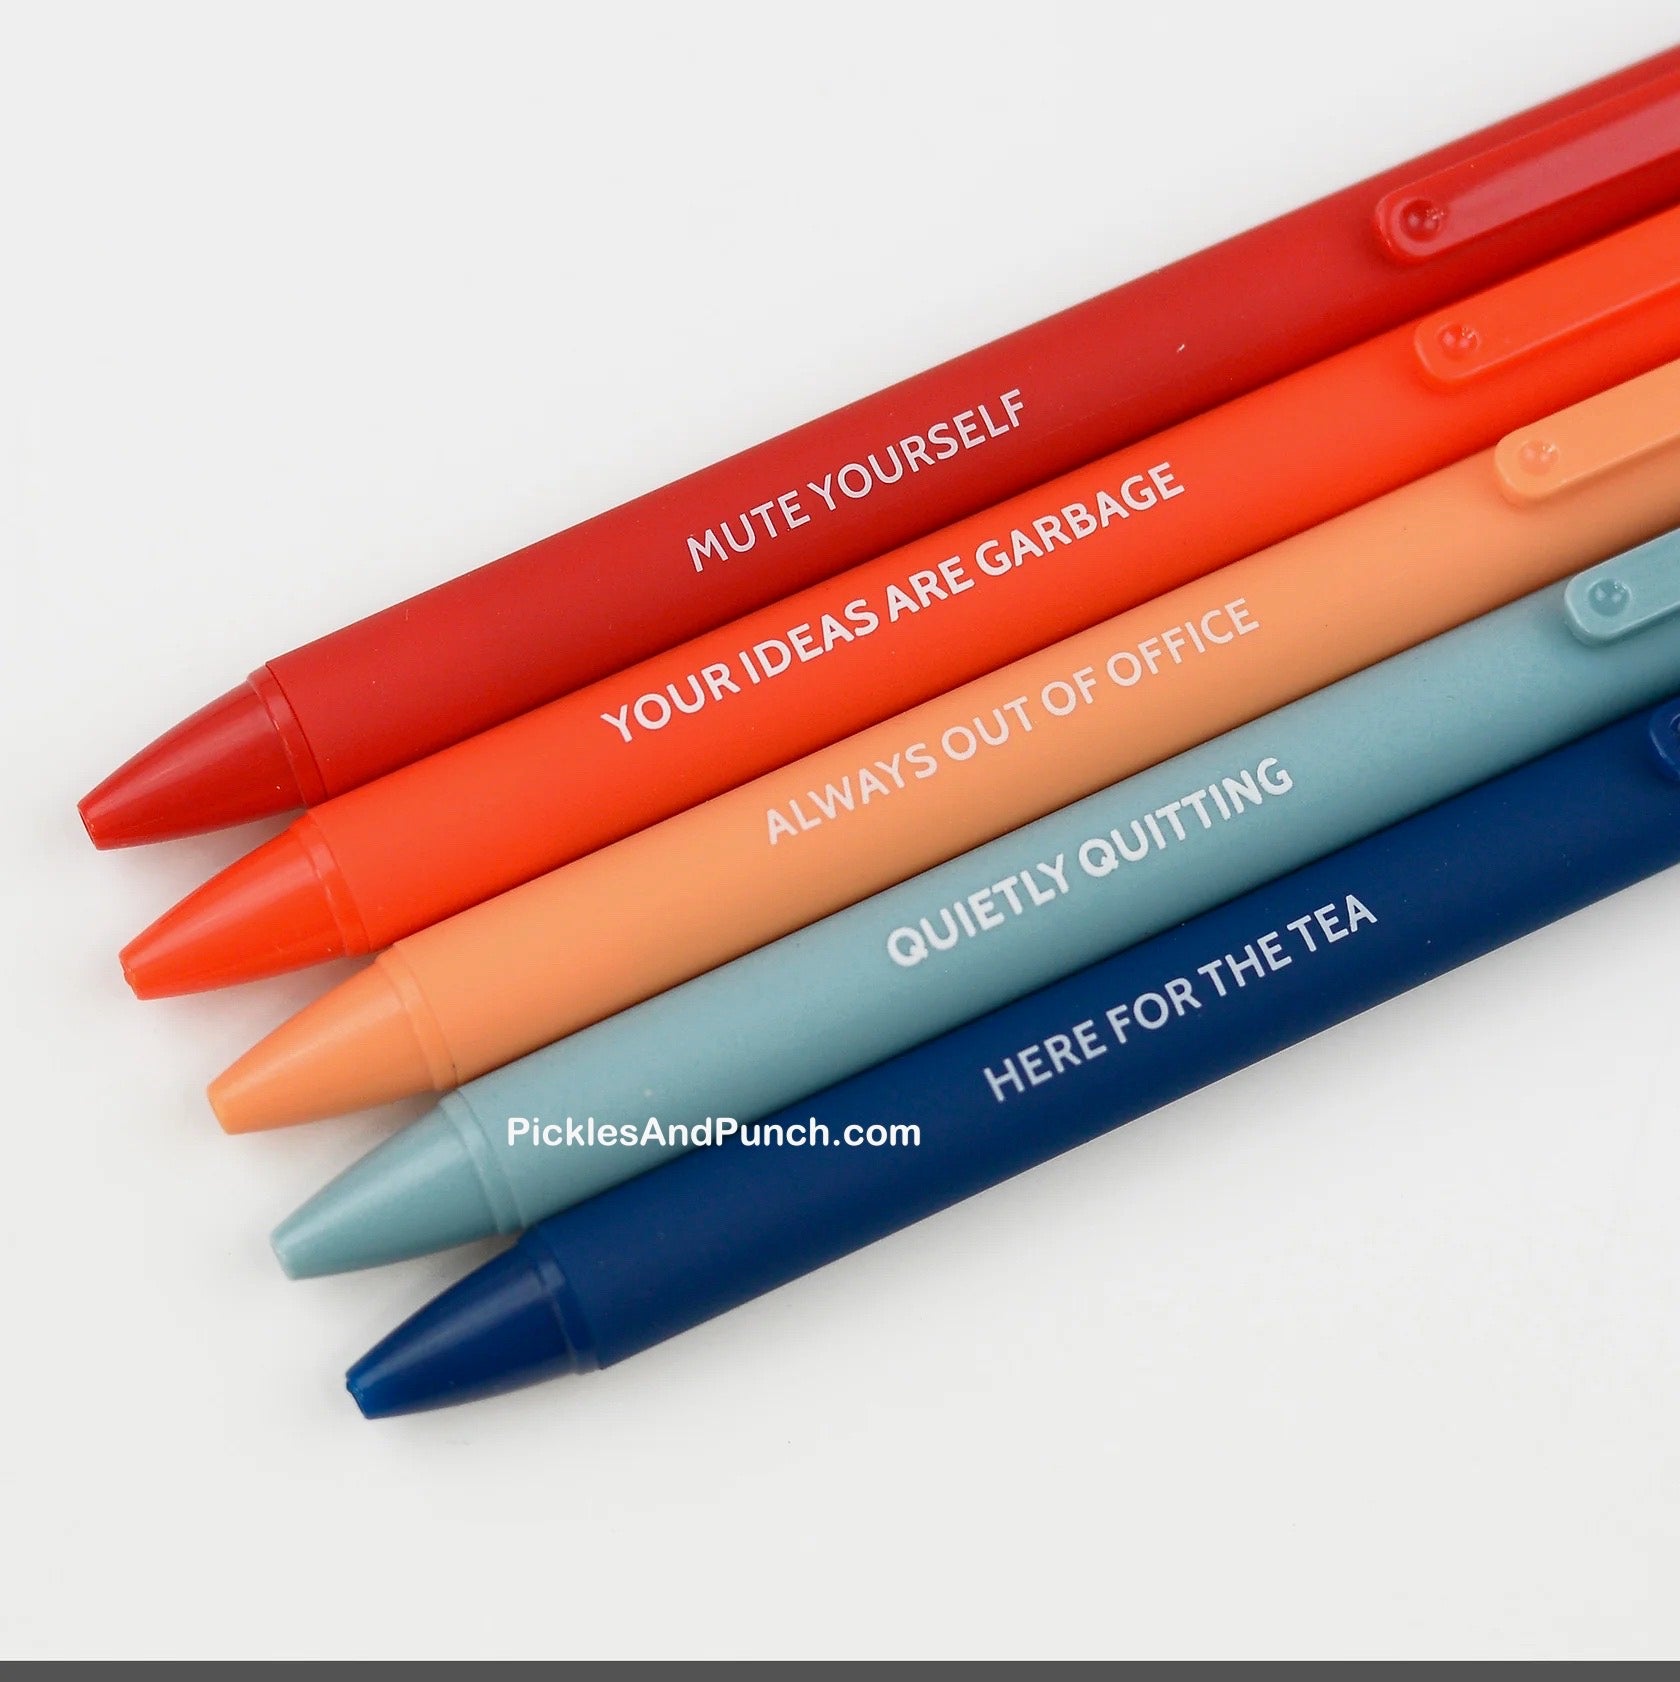 Buy Pen Set For Women Online